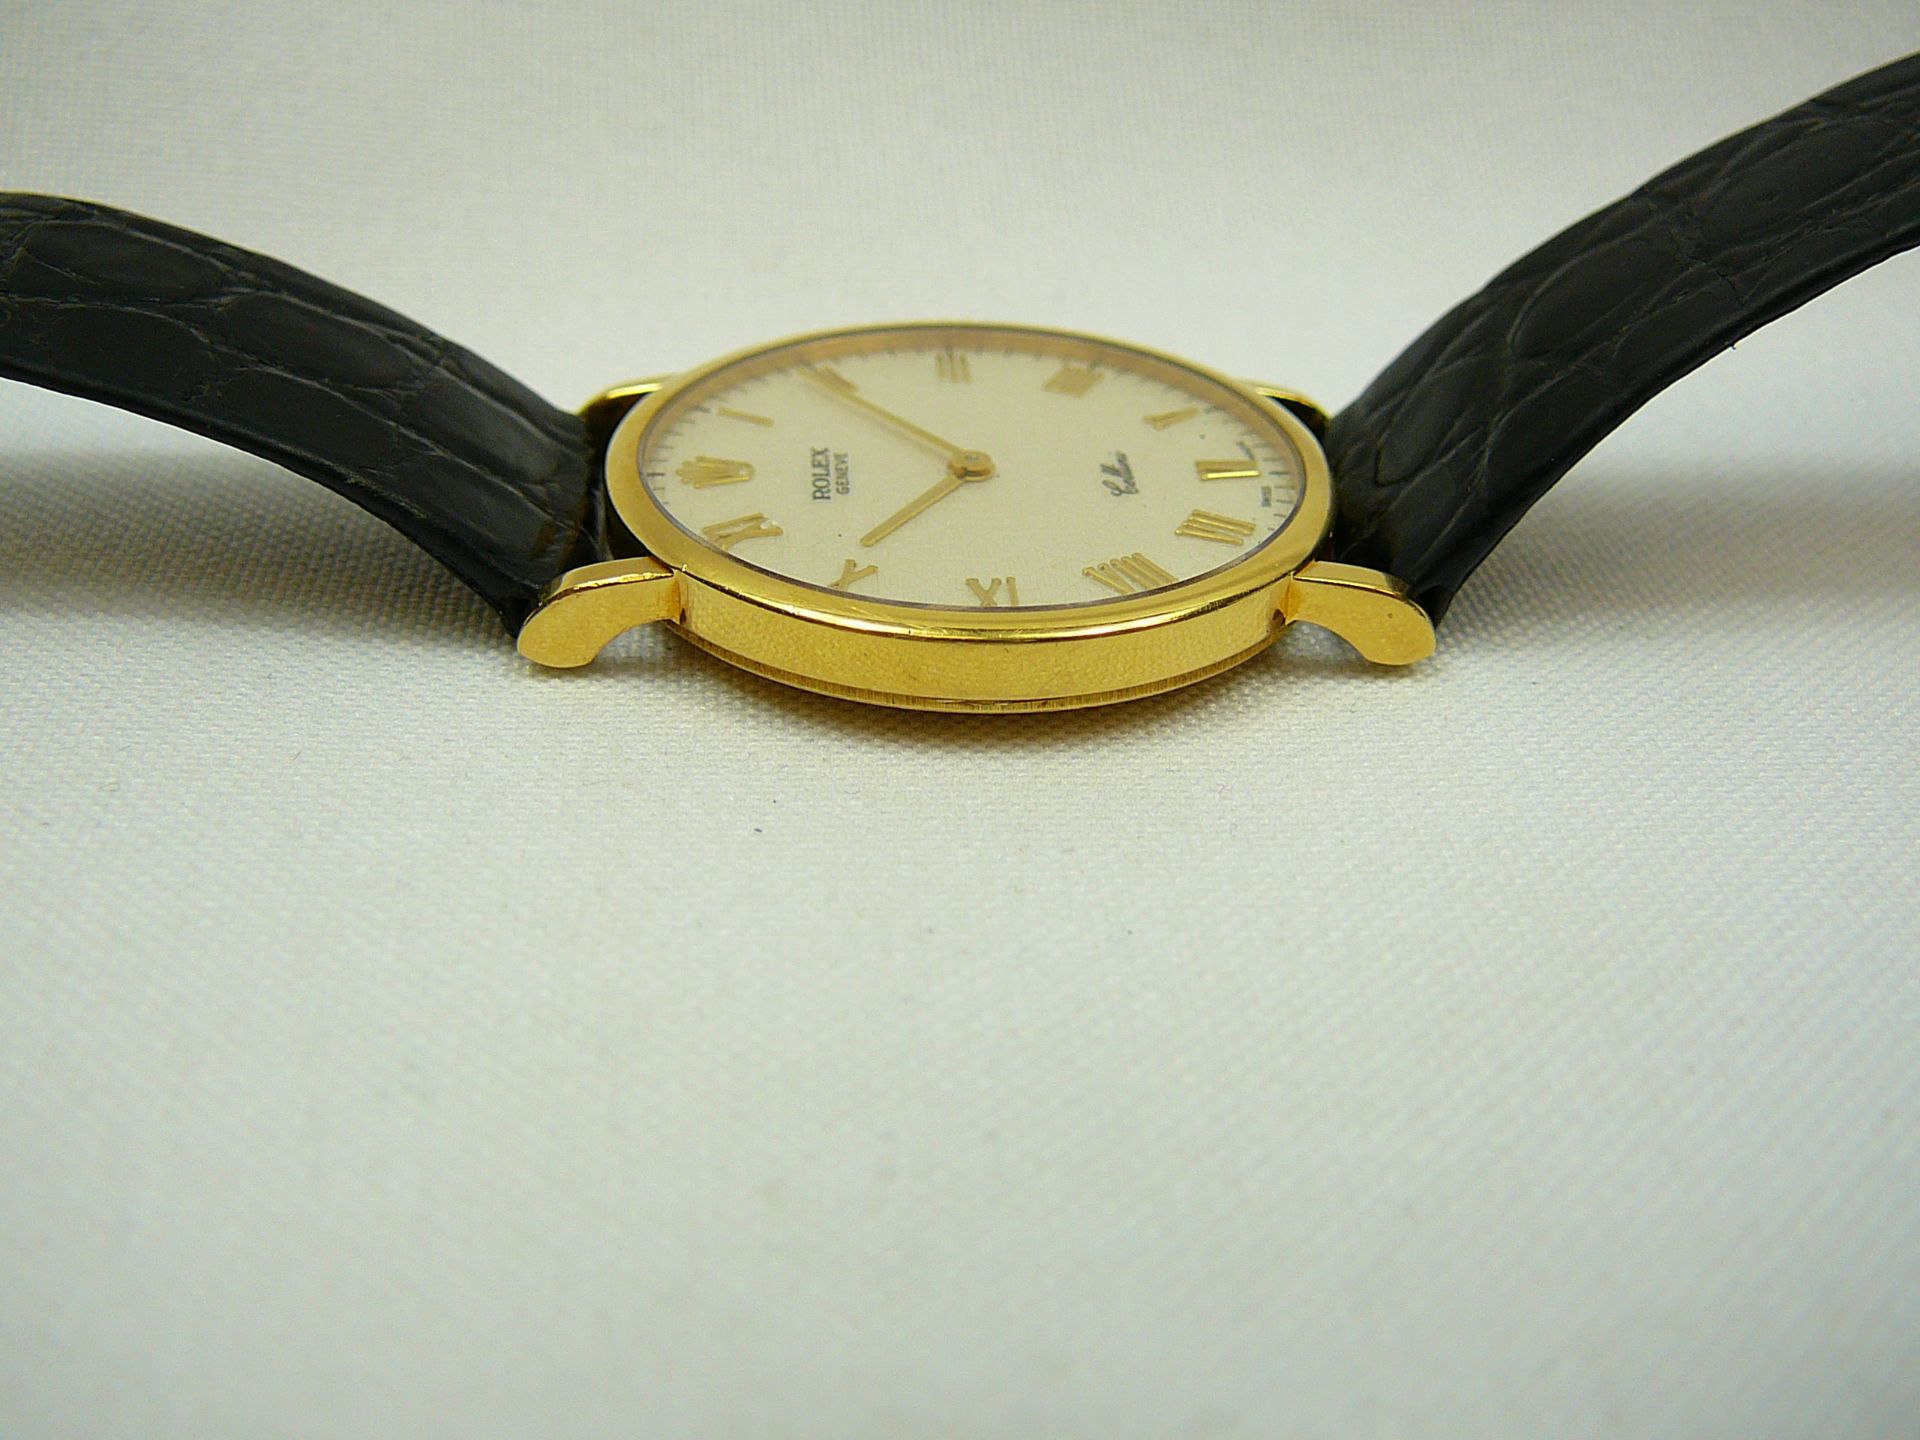 Gents Gold Rolex Wristwatch - Image 5 of 5